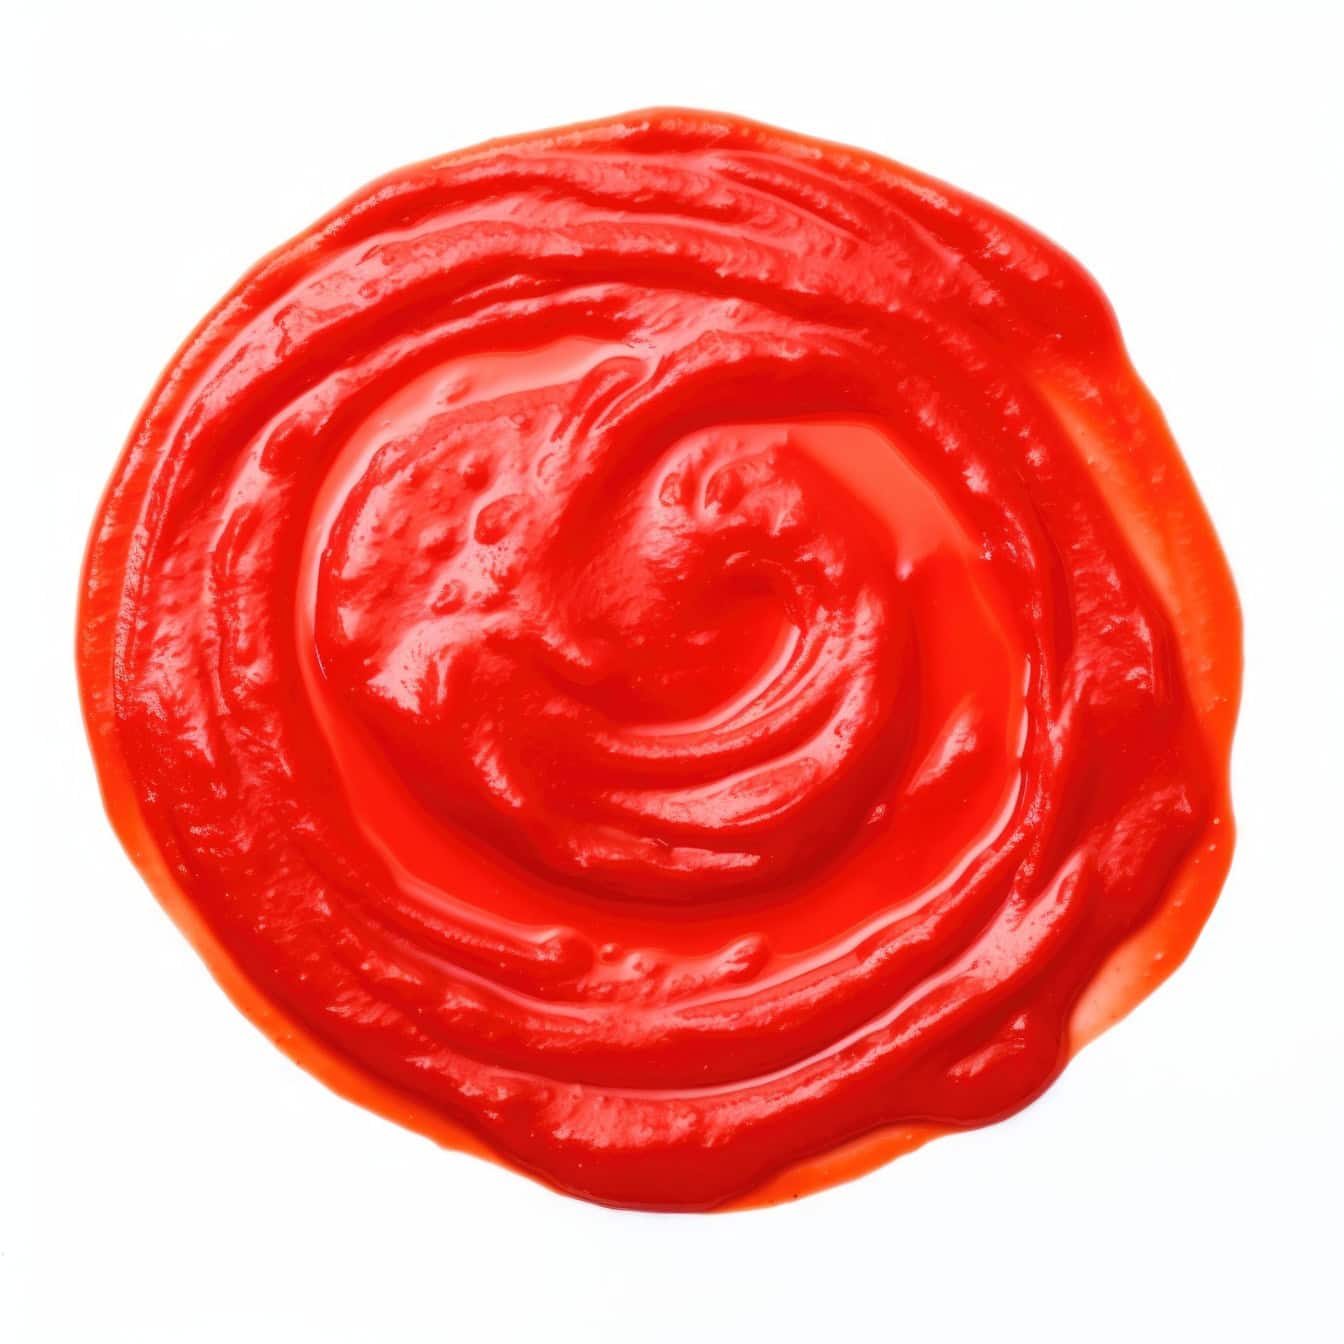 Lingkaran merah saus tomat atau pasta tomat dengan latar belakang putih